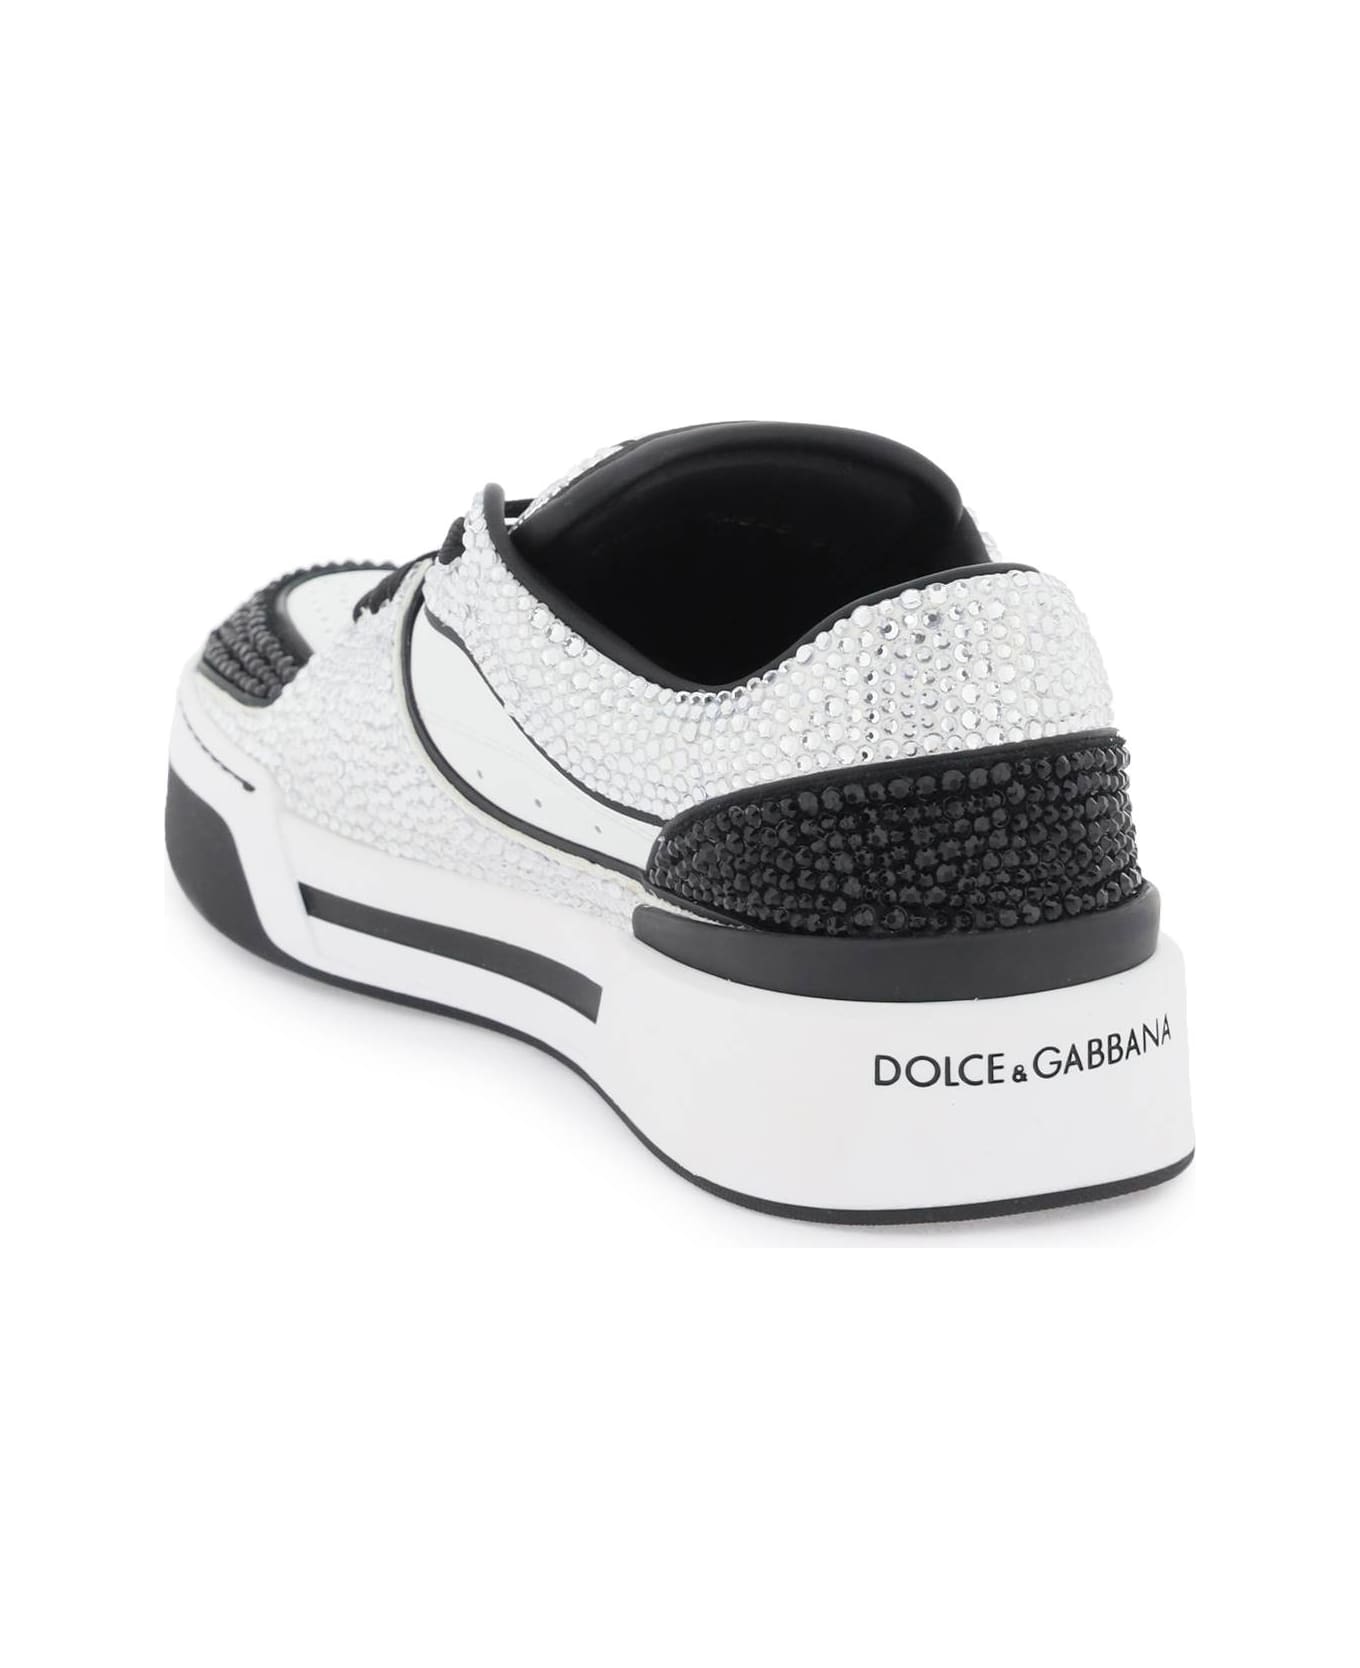 Dolce & Gabbana New Roma Sneakers - BIANCO NERO (White) スニーカー